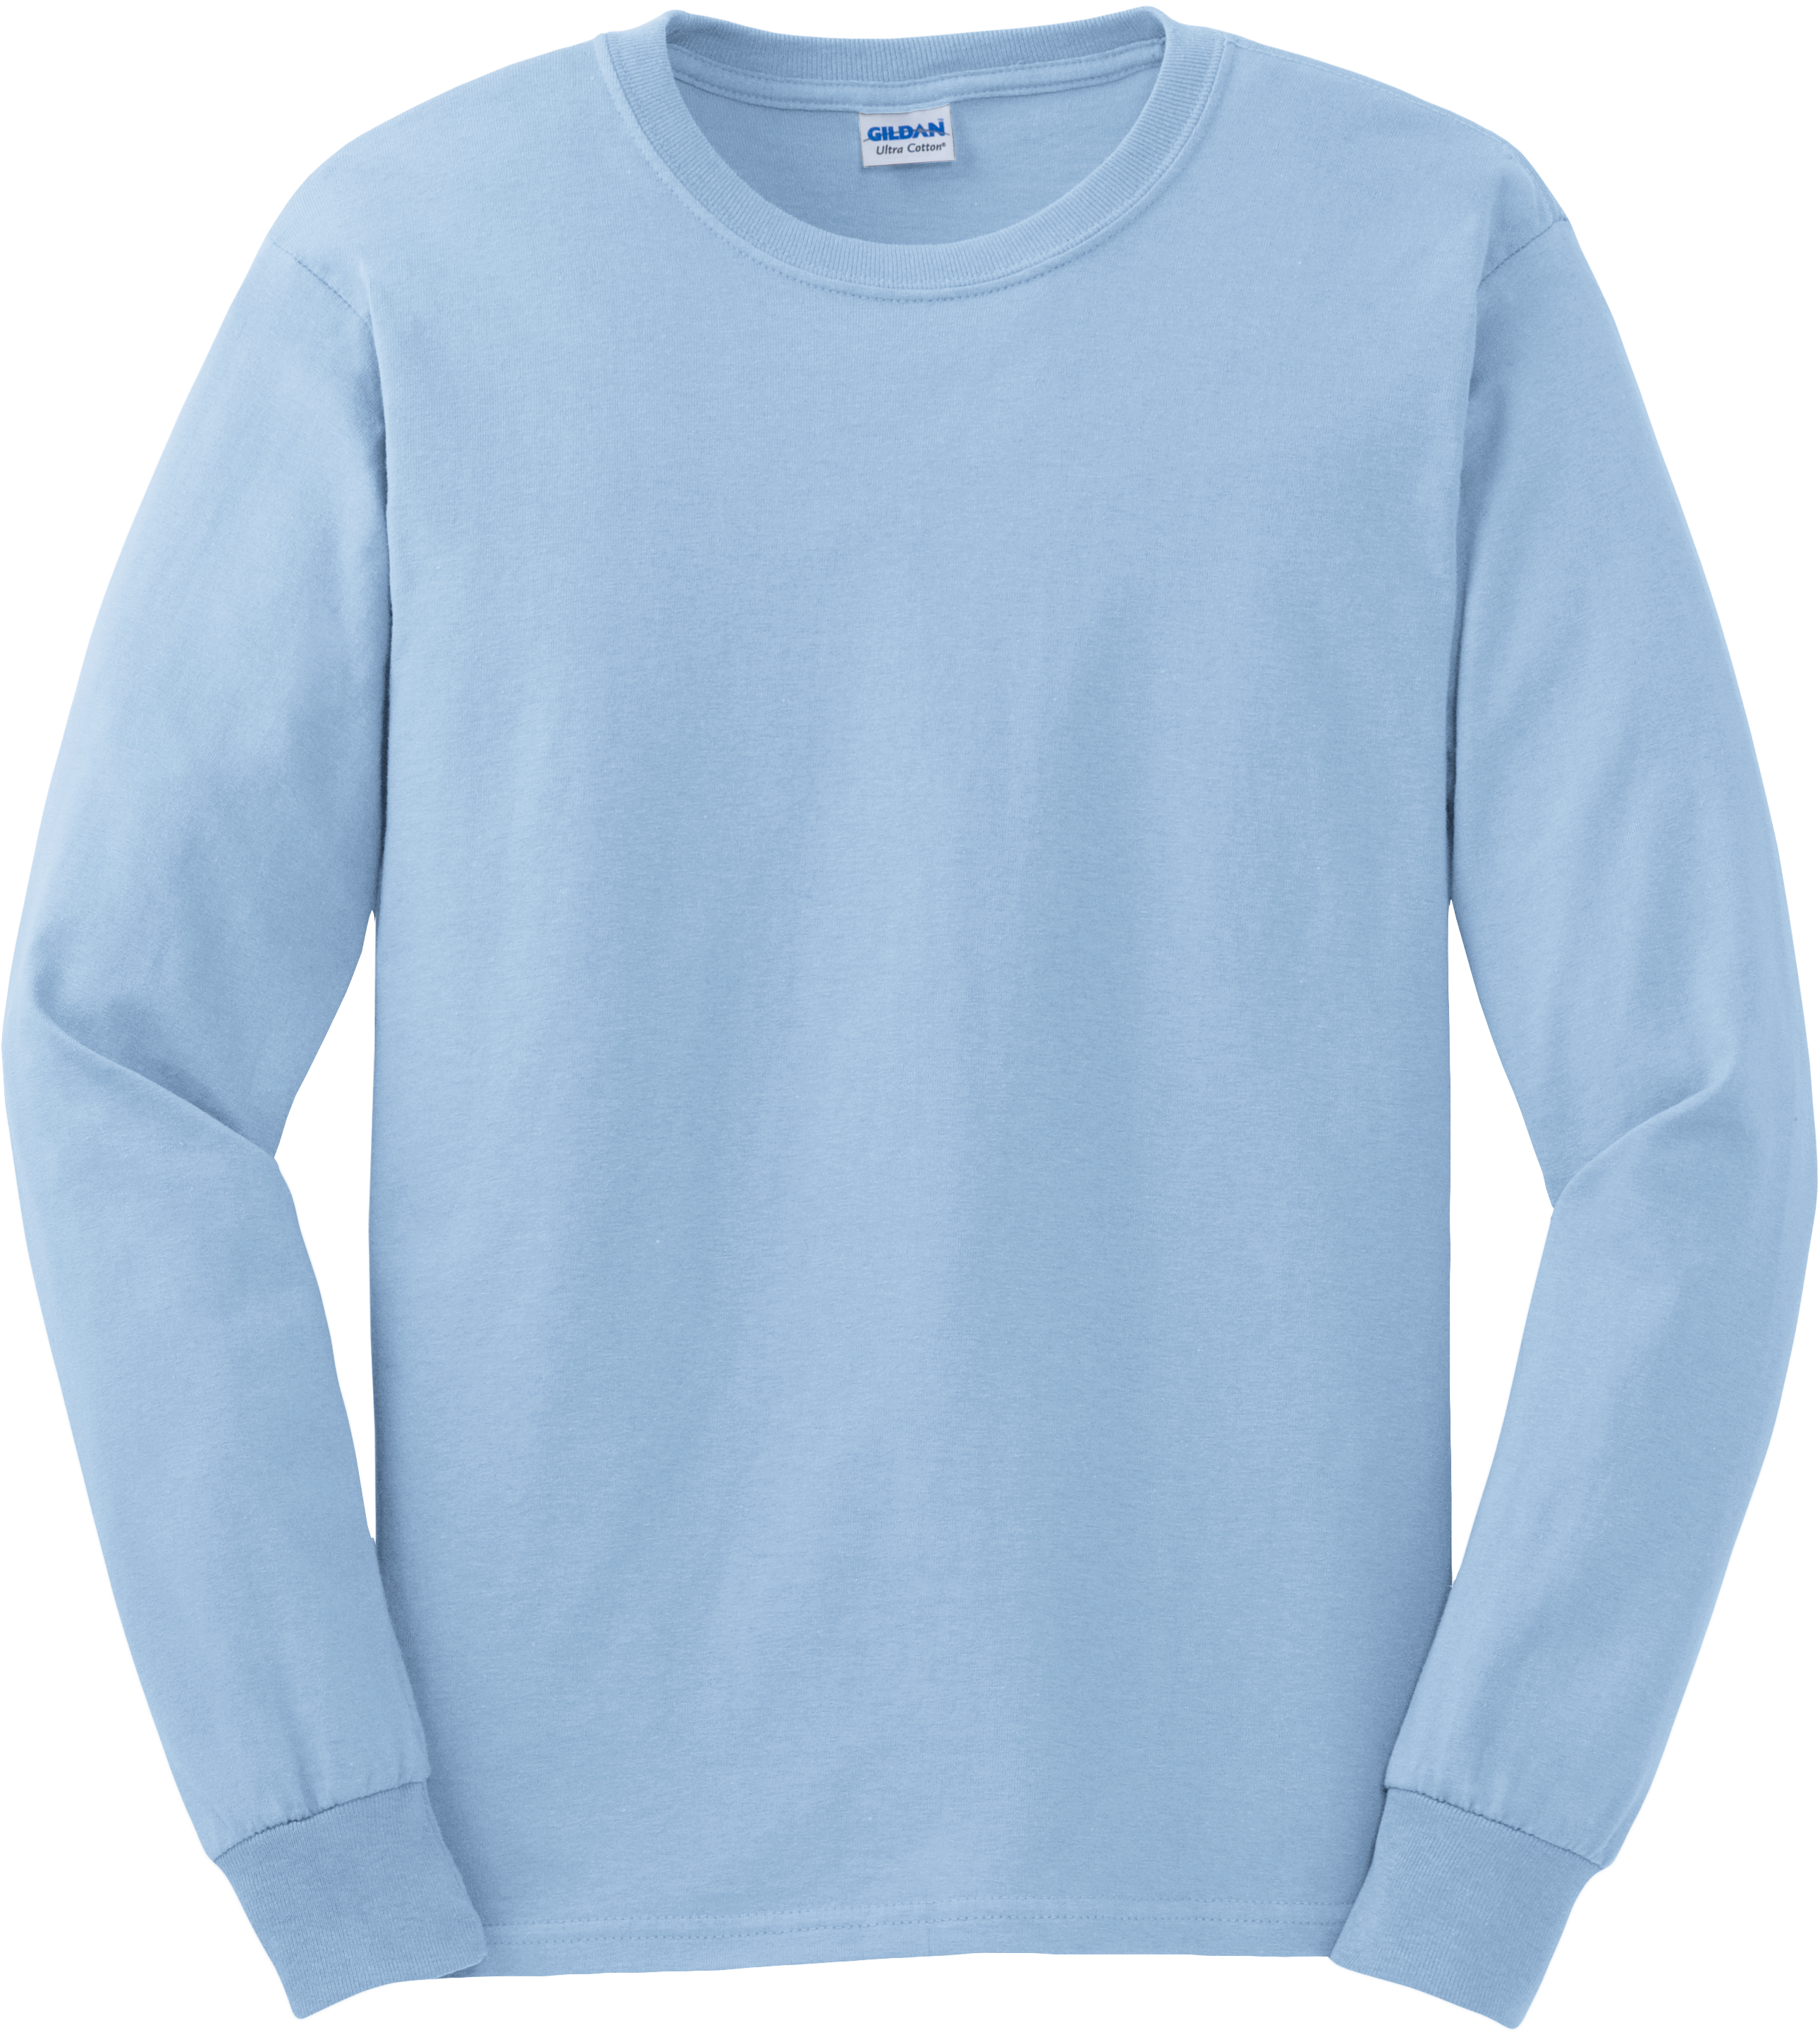 Watercolor Wolf Classic T-shirt - Aqua Blue Pearl Pink Seashells Girly Mermaid Shell (1155x1155), Png Download